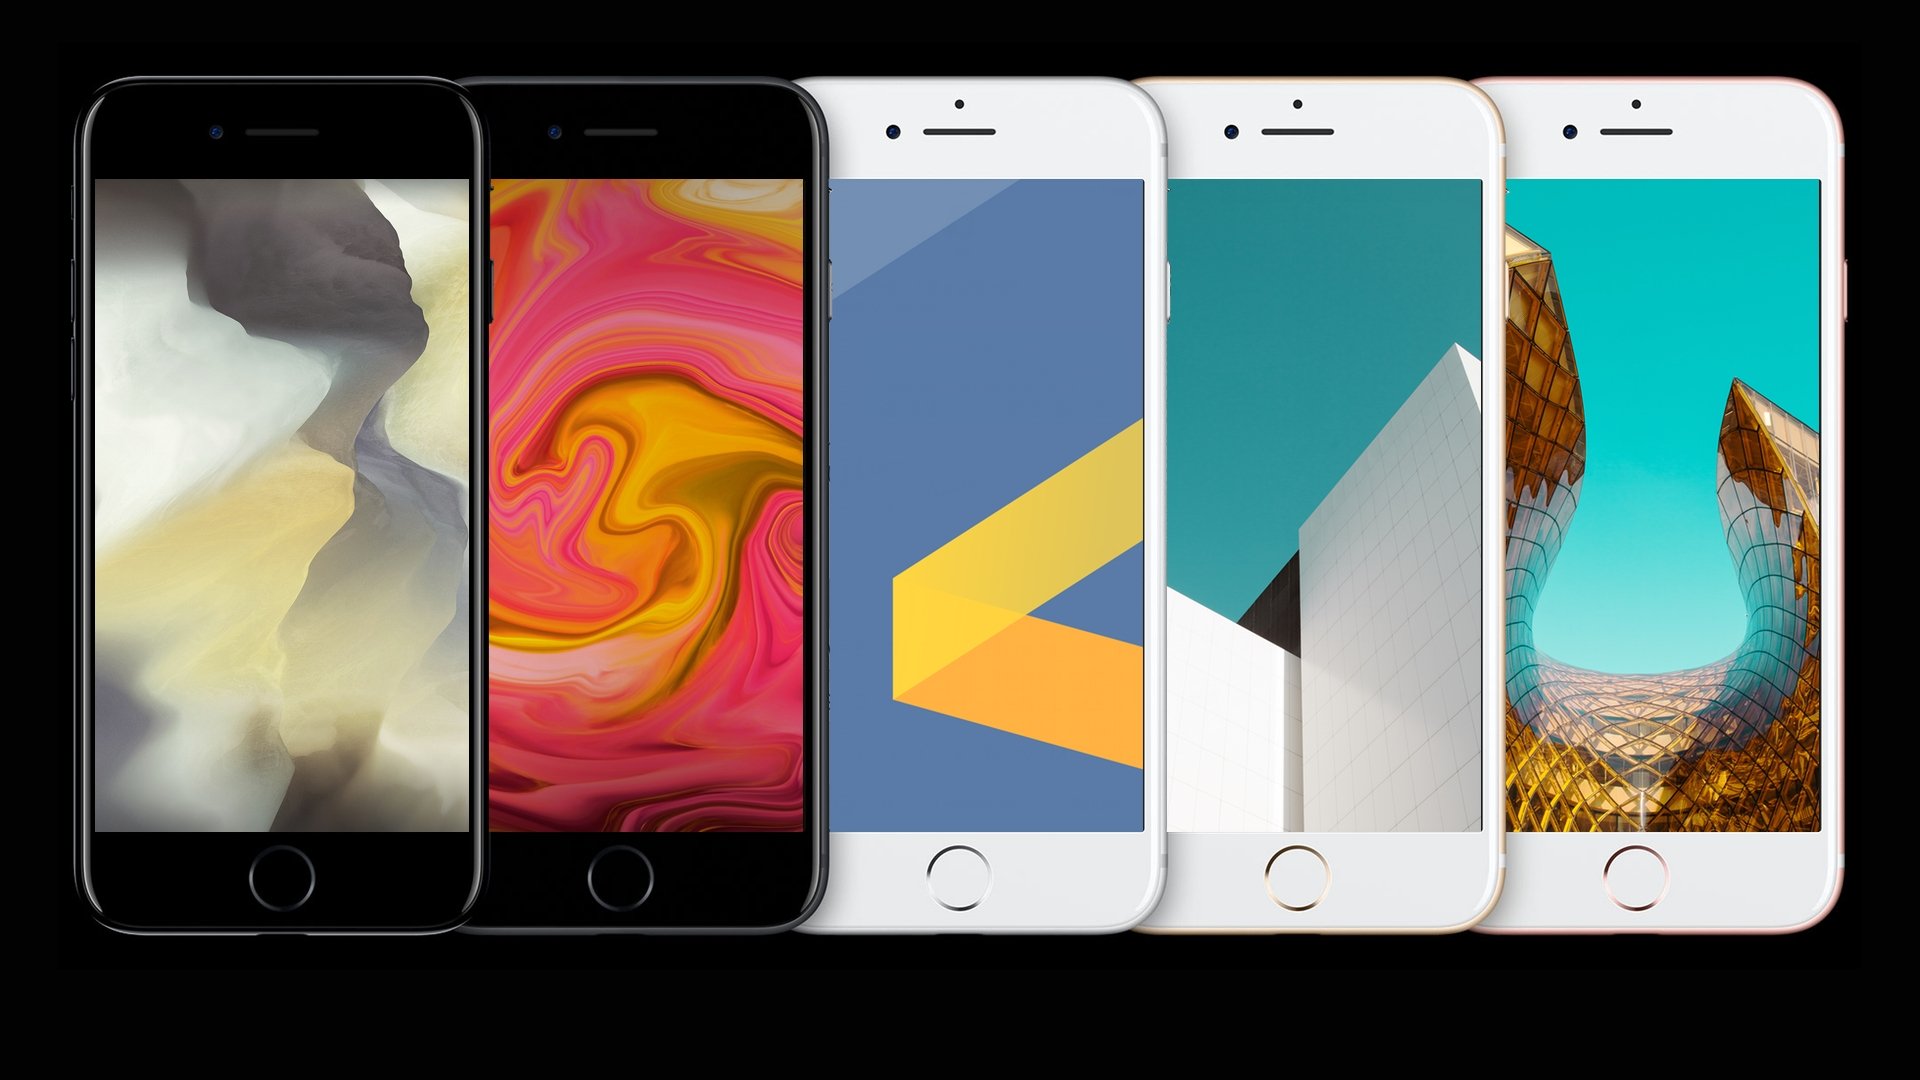 Iphone 7 Wallpaper Zum Kostenlosen Download Update Oneplus 2 Bilderset